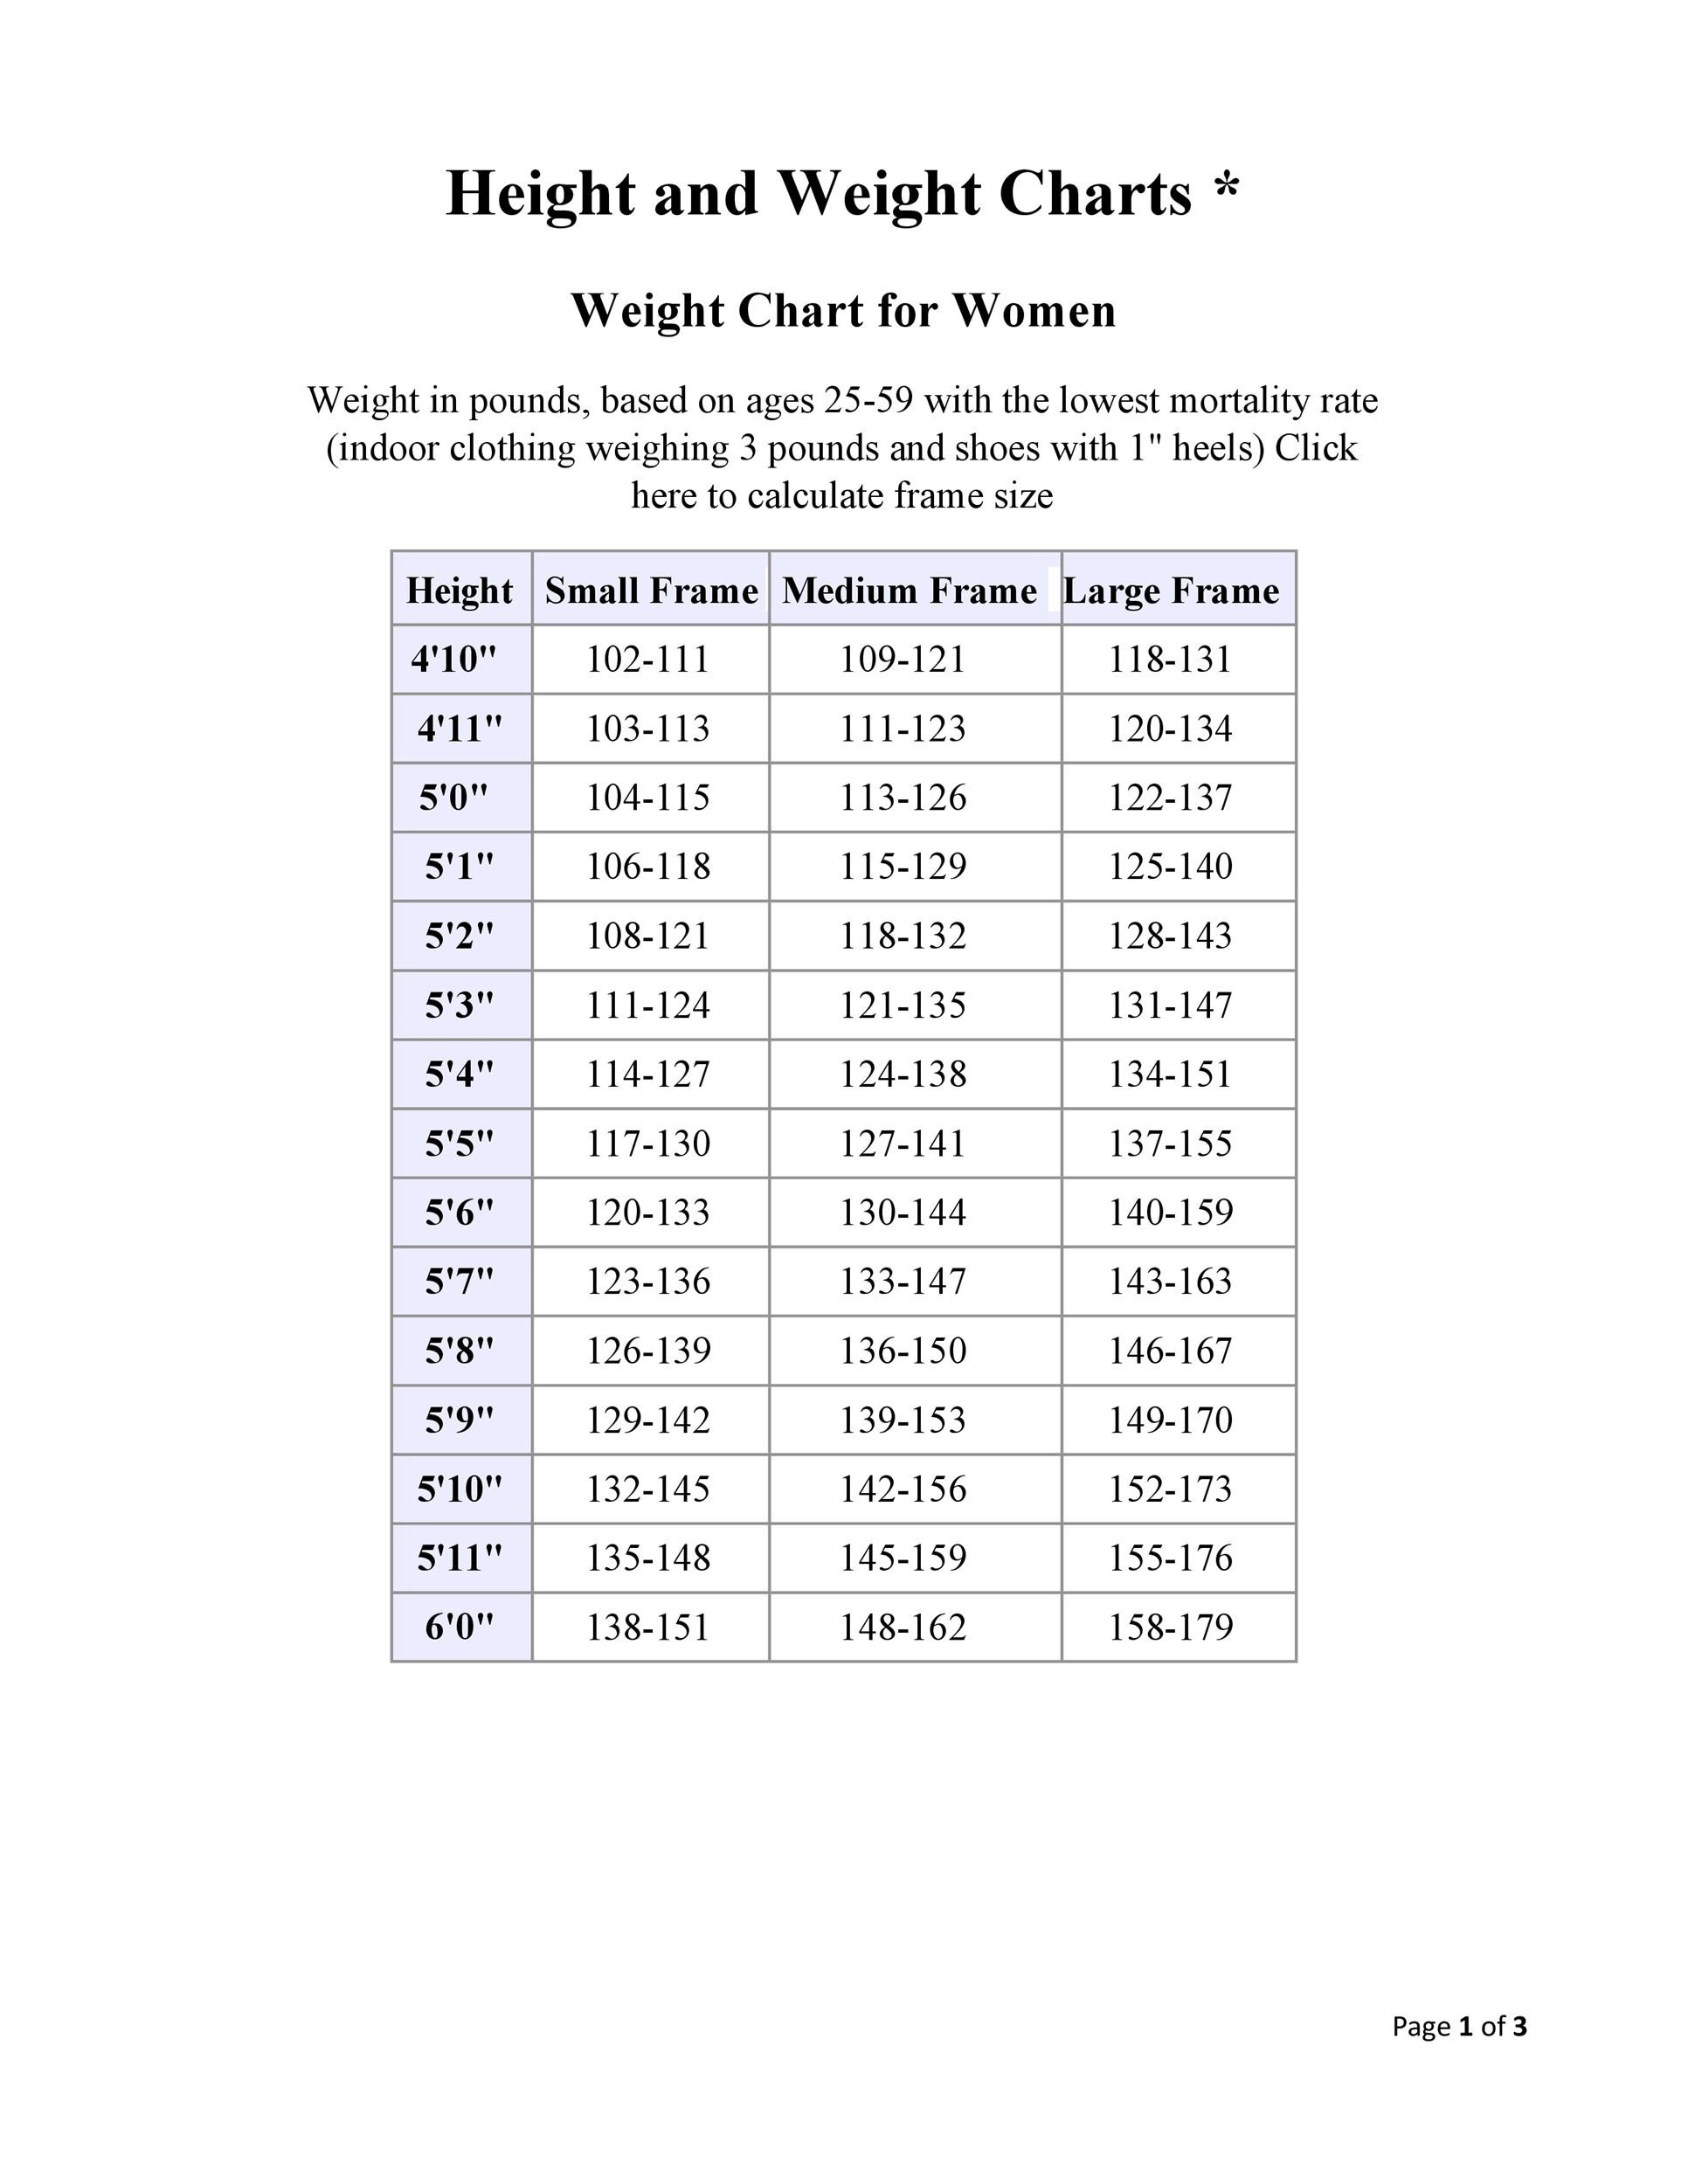 Life Insurance Weight Chart Female